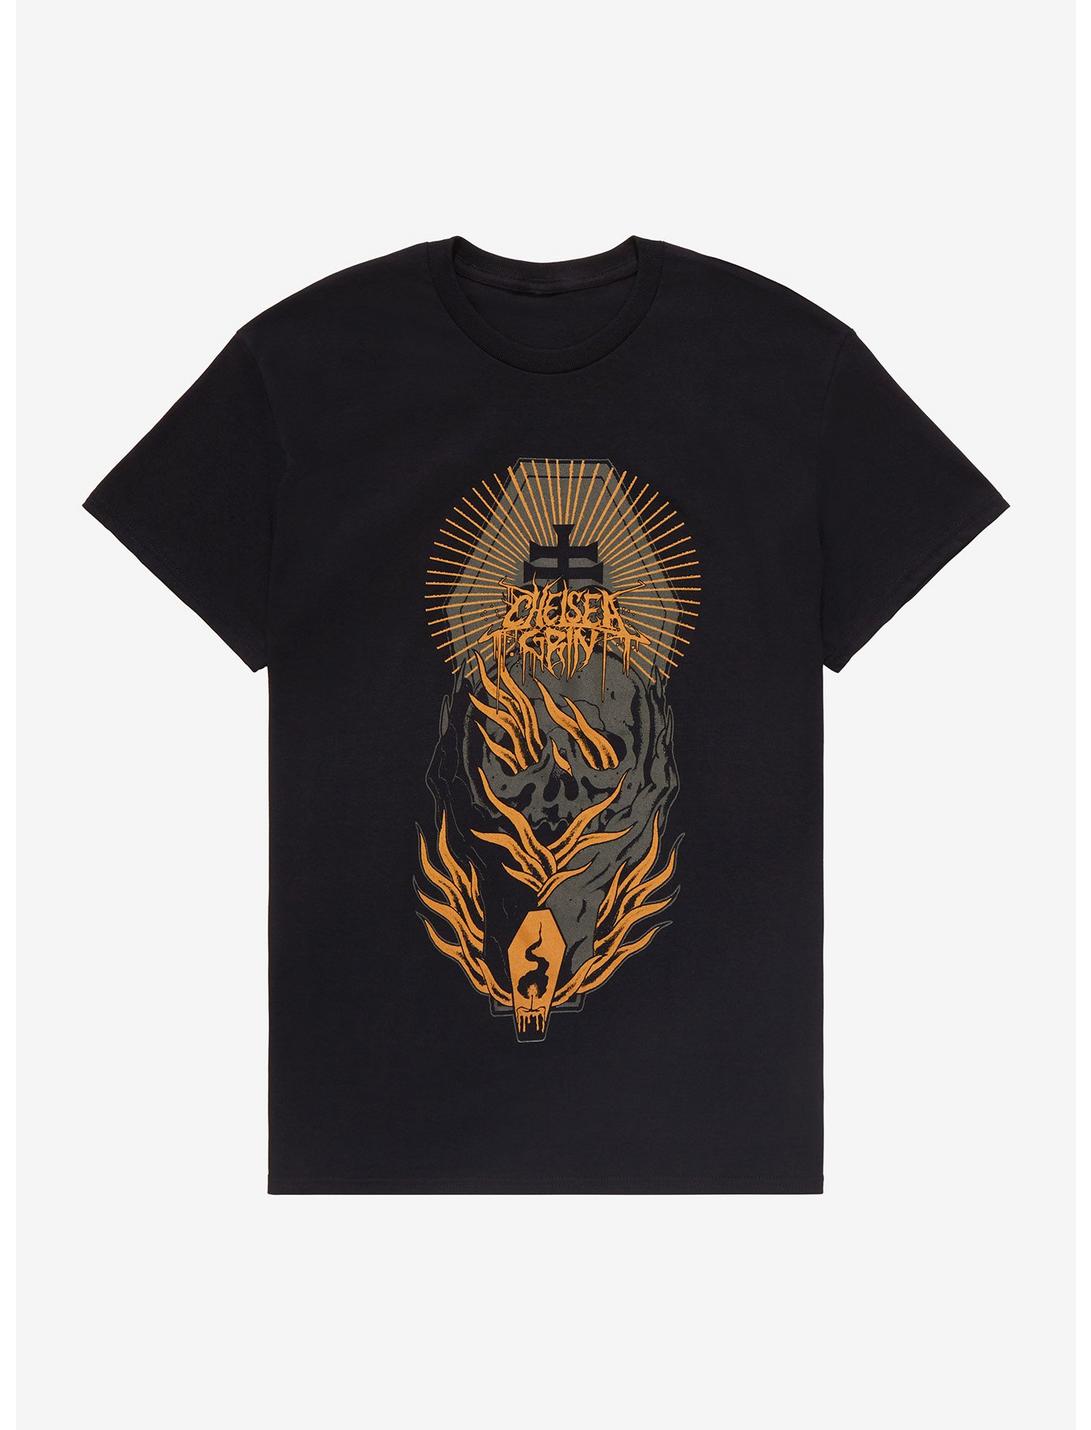 Chelsea Grin Flaming Skull T-Shirt, BLACK, hi-res